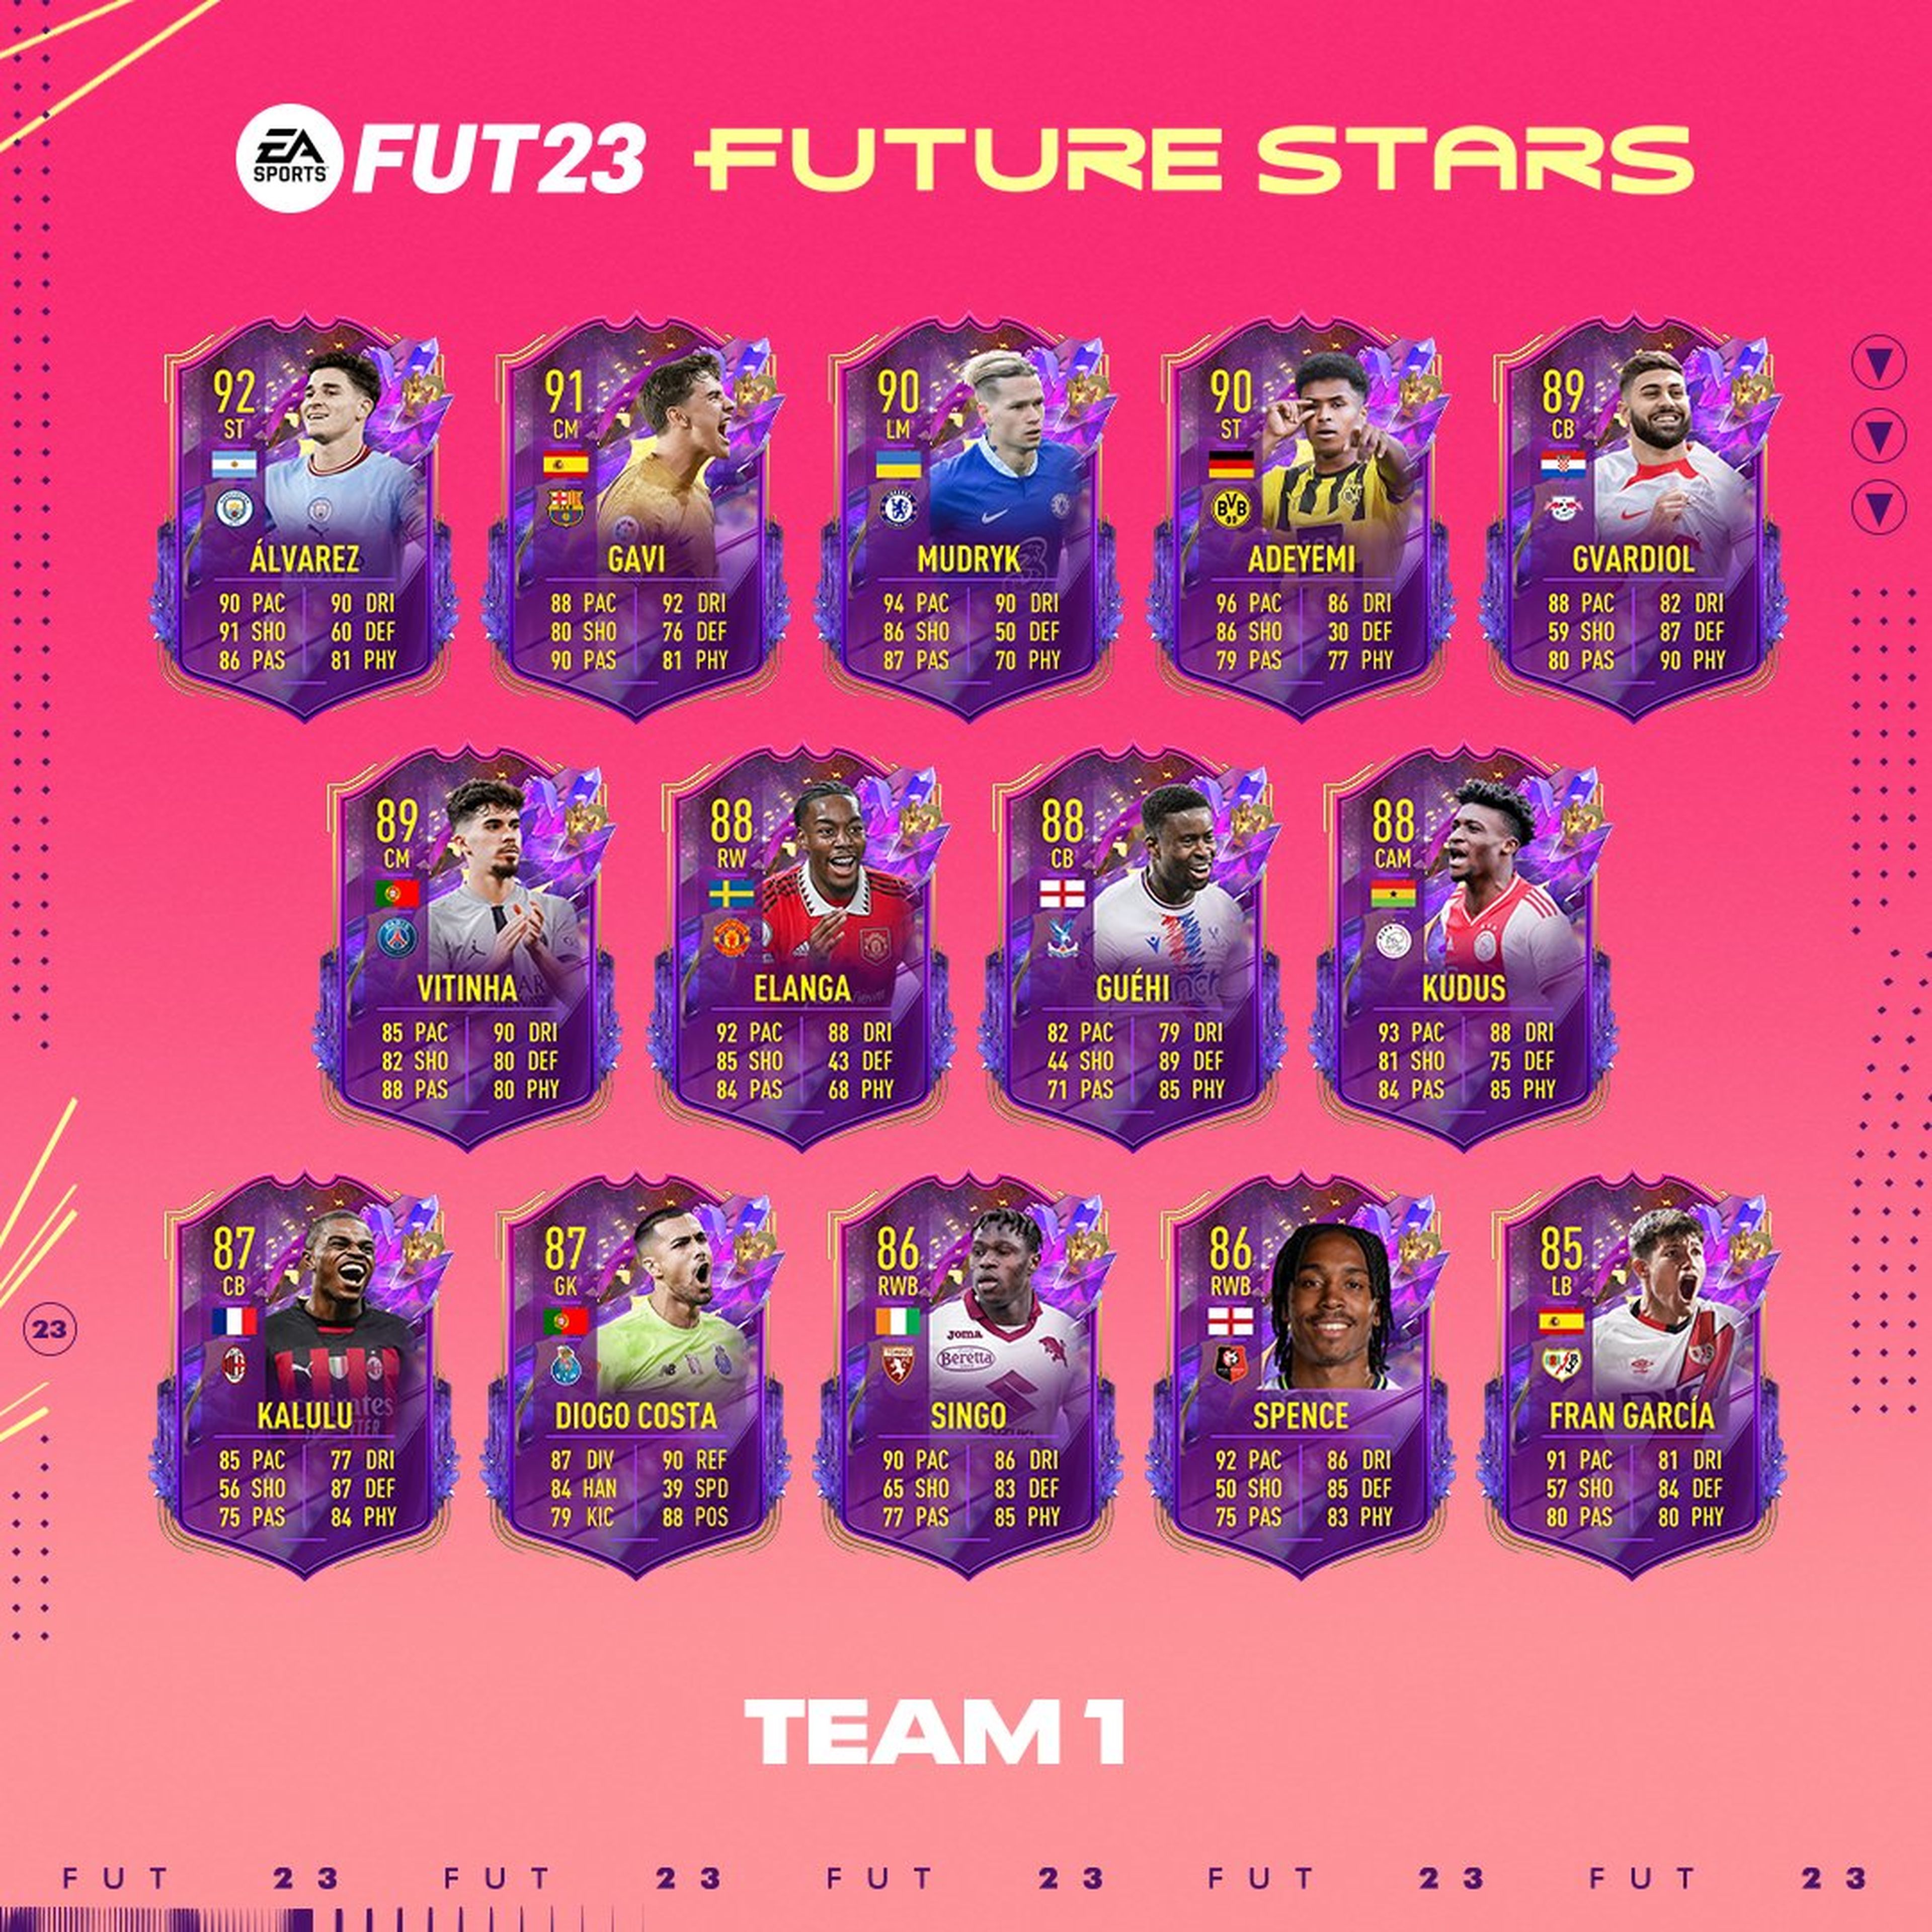 FIFA 23 Future Stars